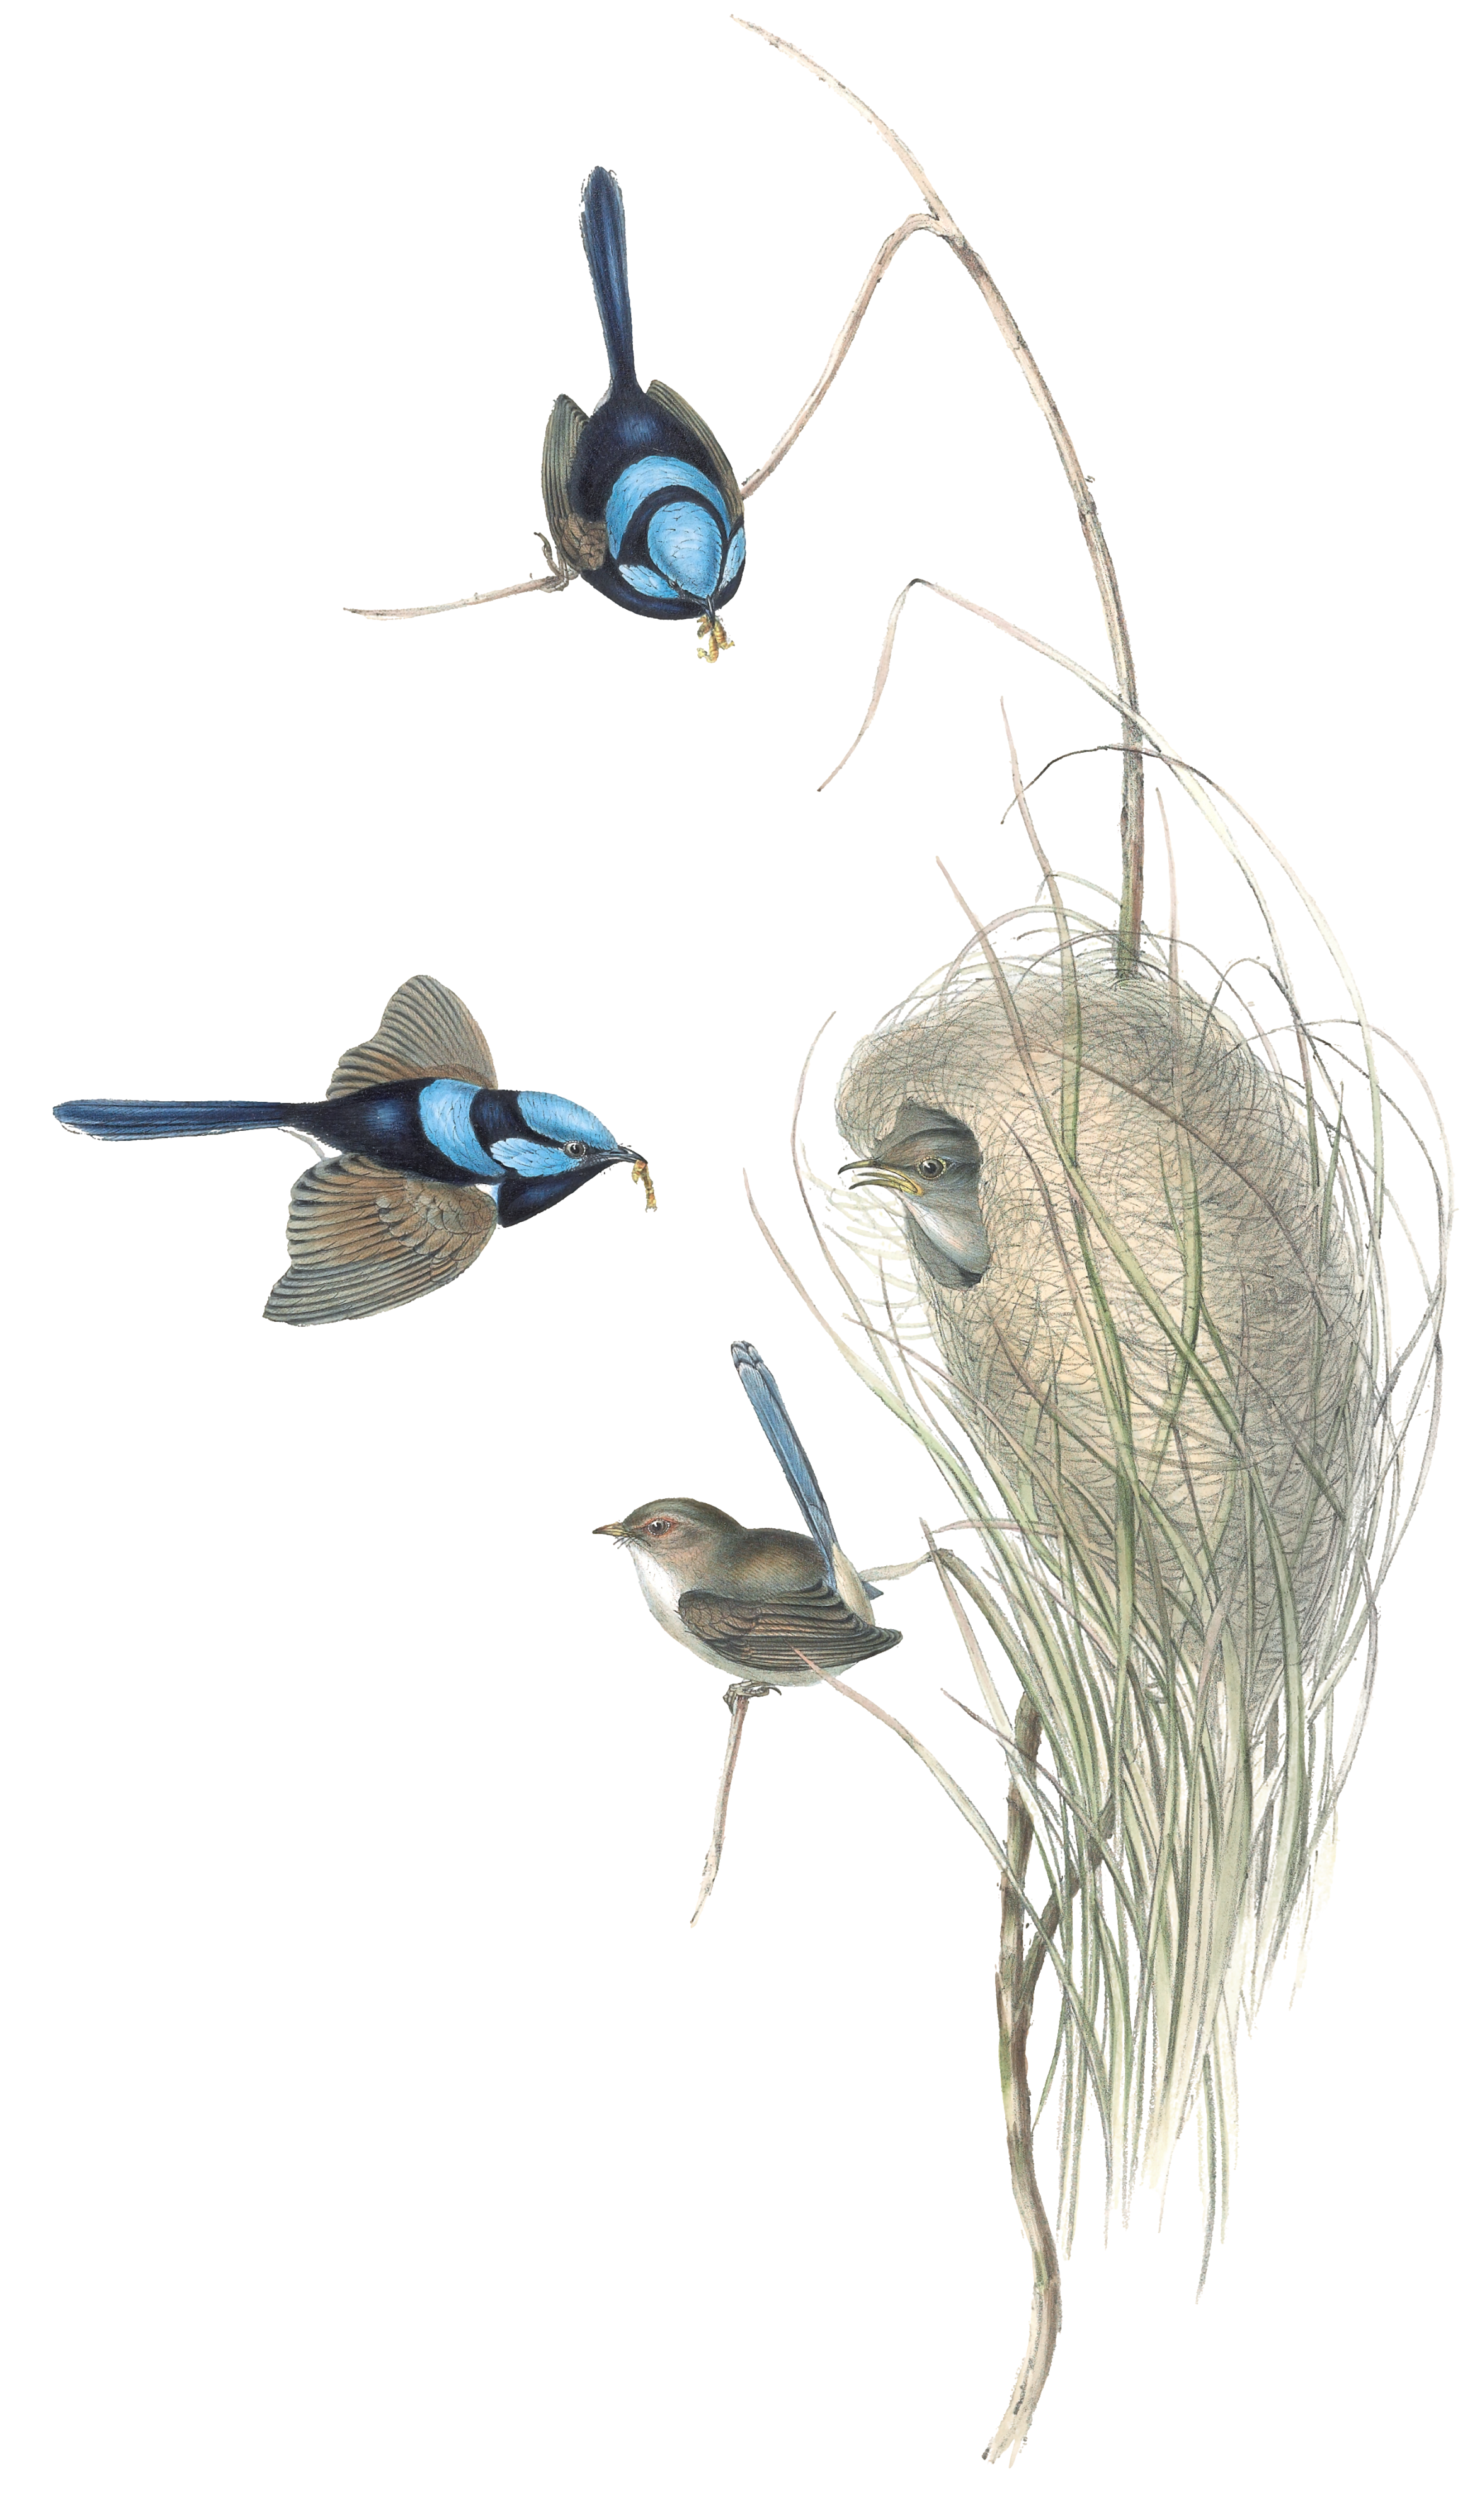 Blue Wren Bird Vintage Illustrations